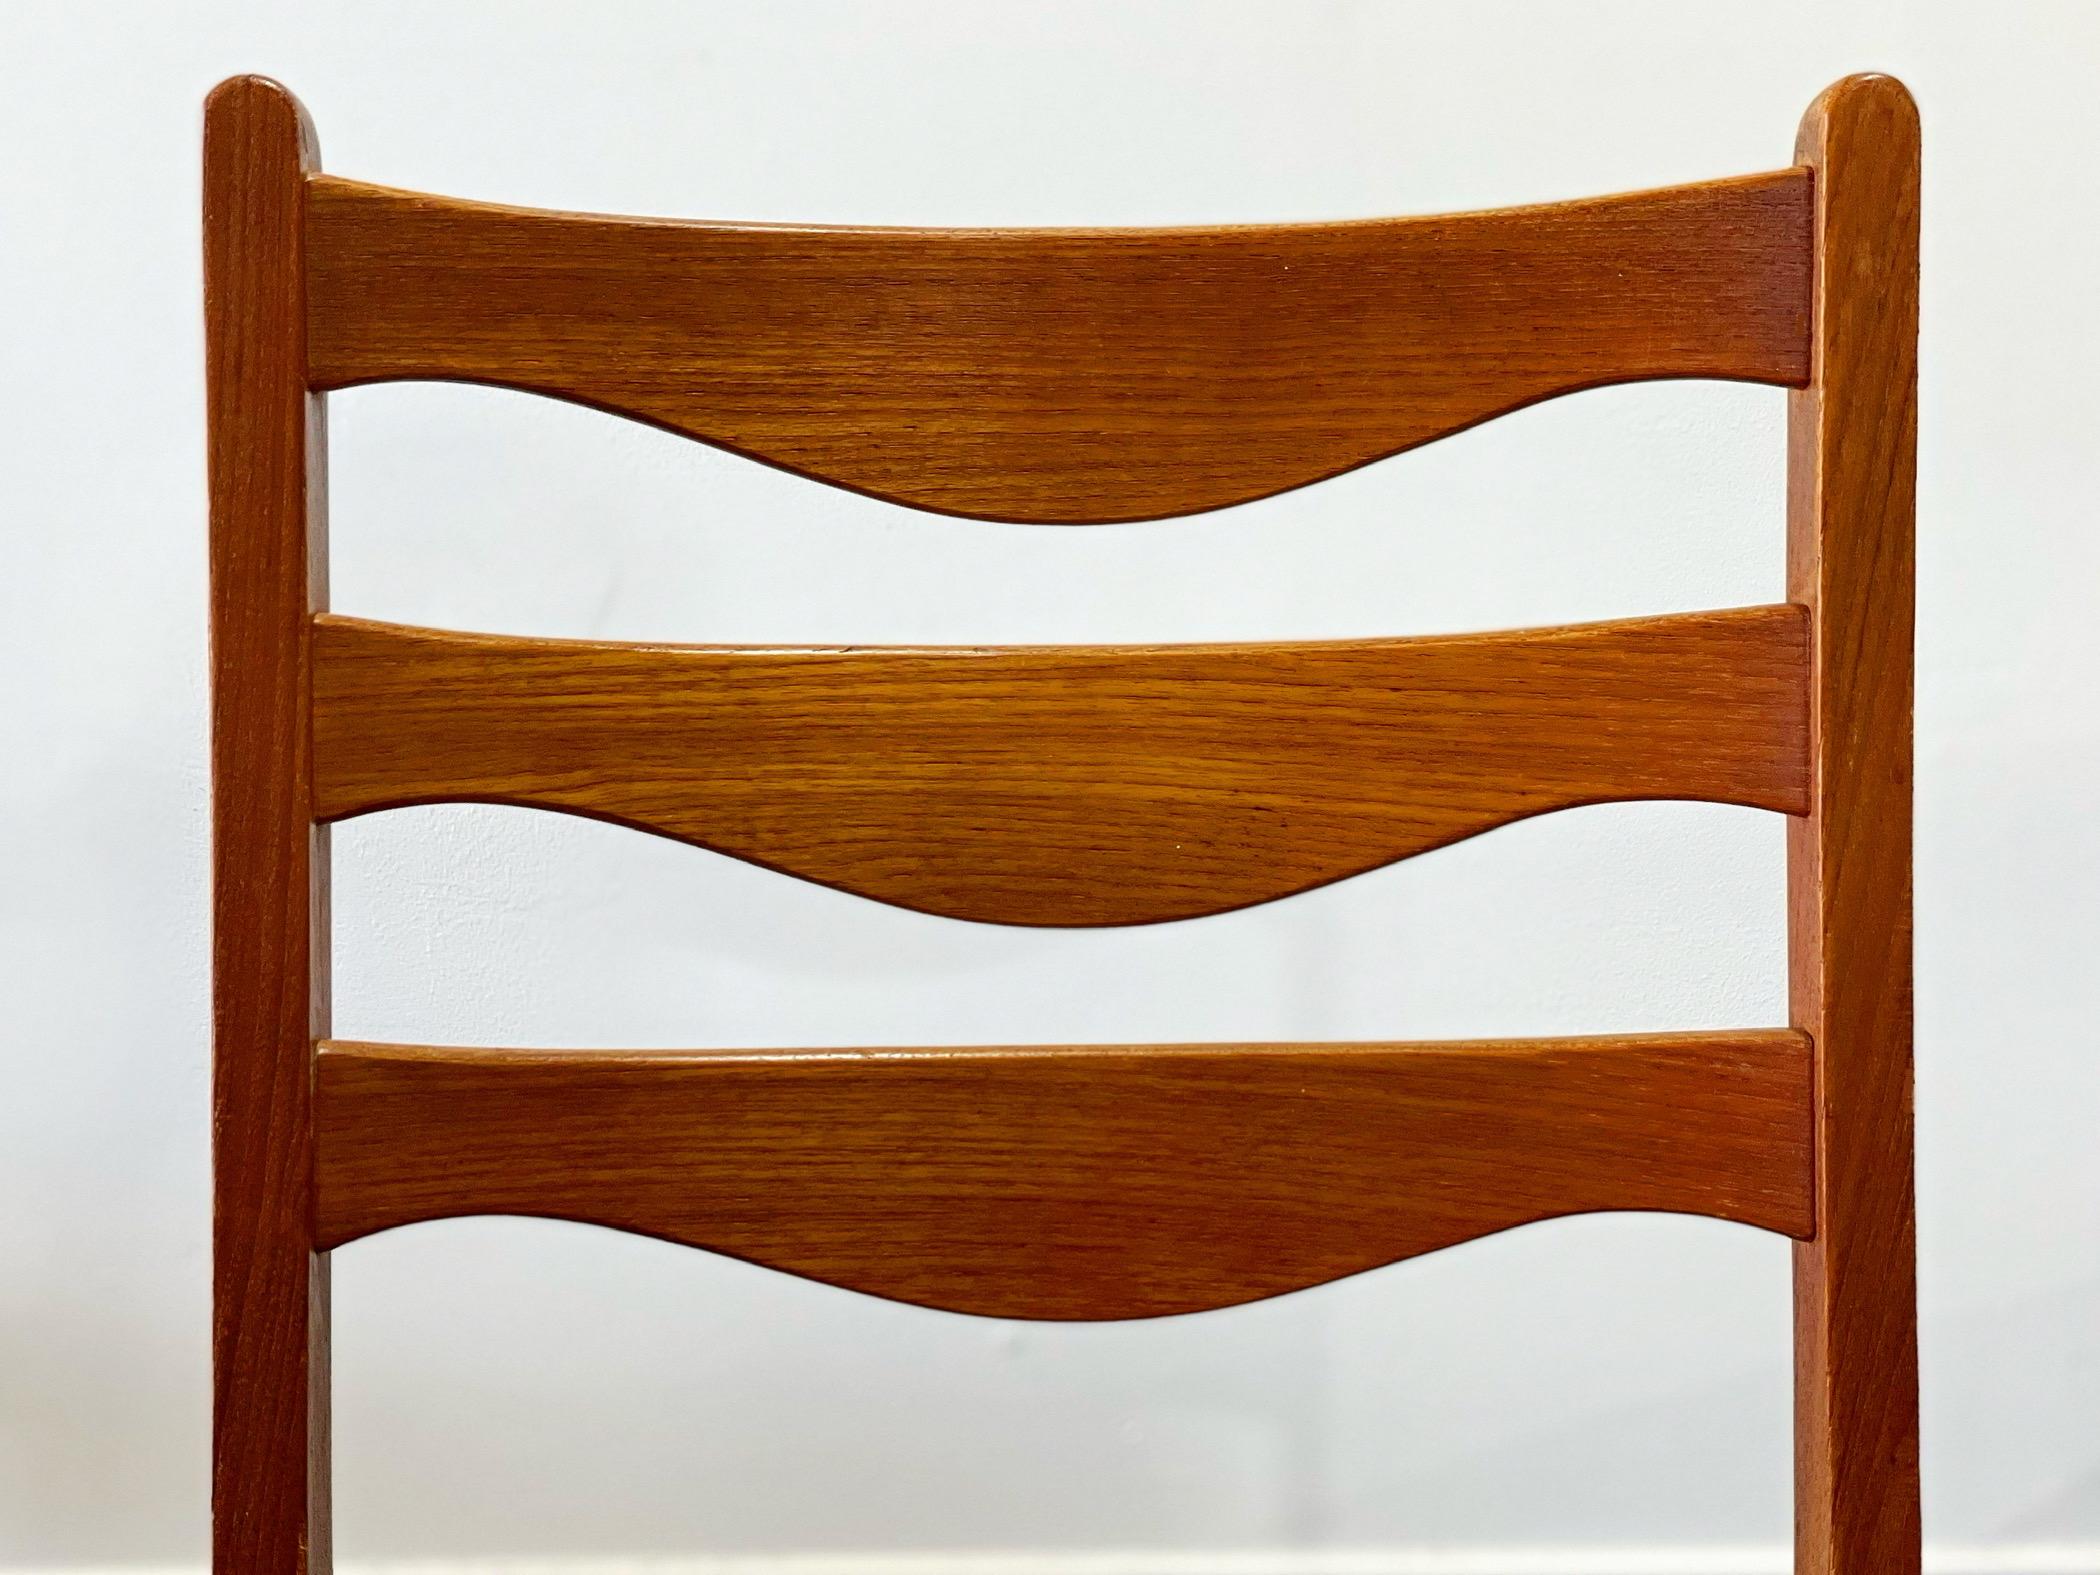 Arne Wahl Iversen Dining Chairs in Teak, Set of 8, Midcentury Danish Modern 1